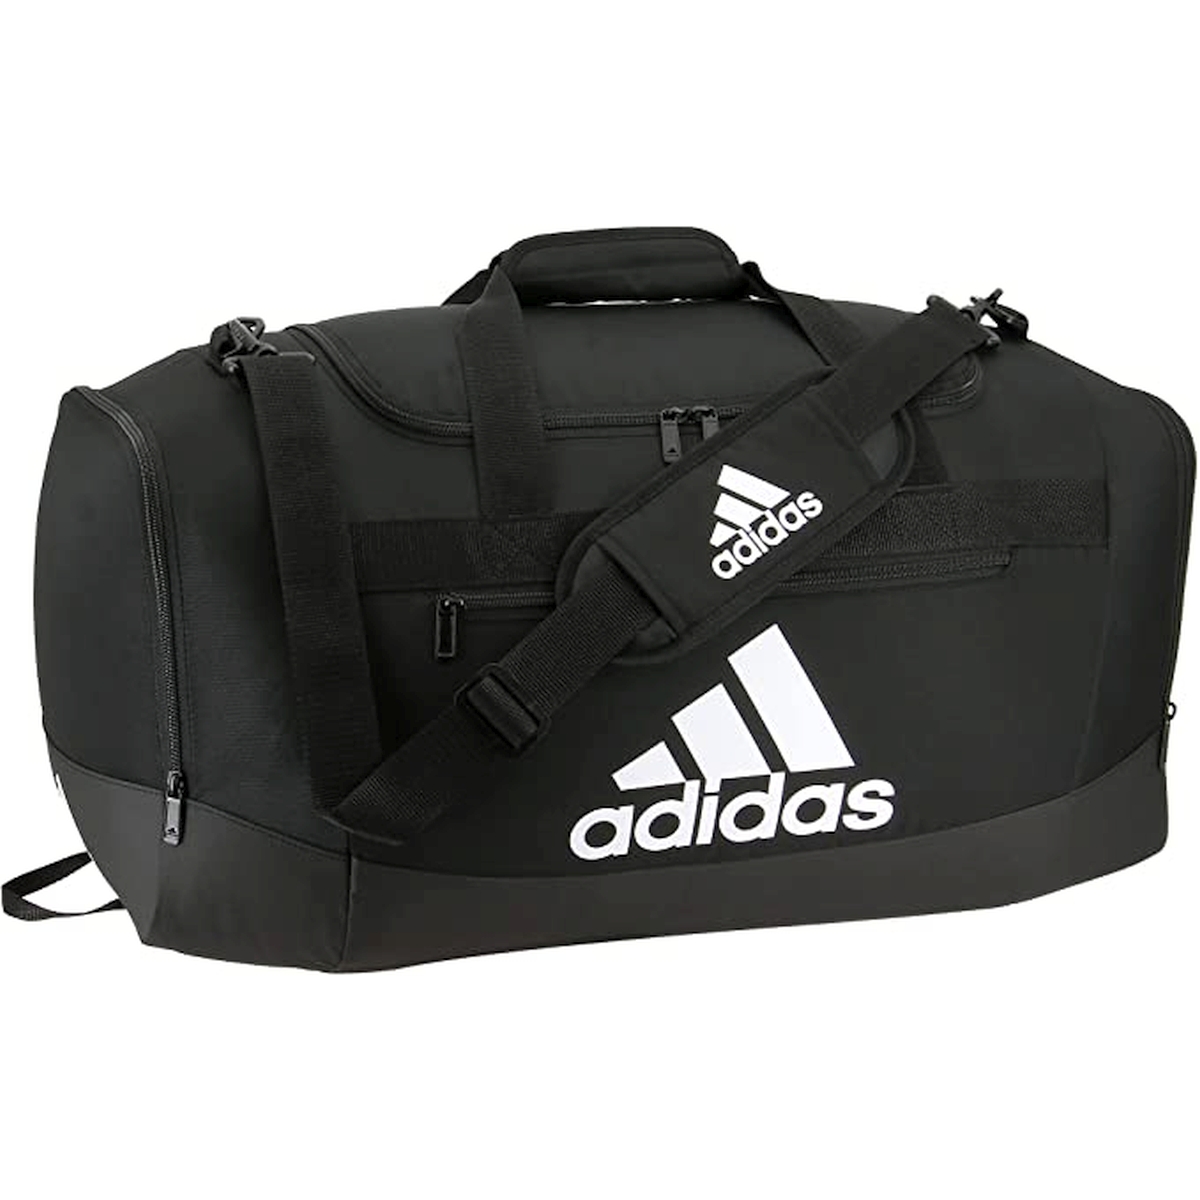 Adidas Defender IV Medium Duffel Bag (Black/White)